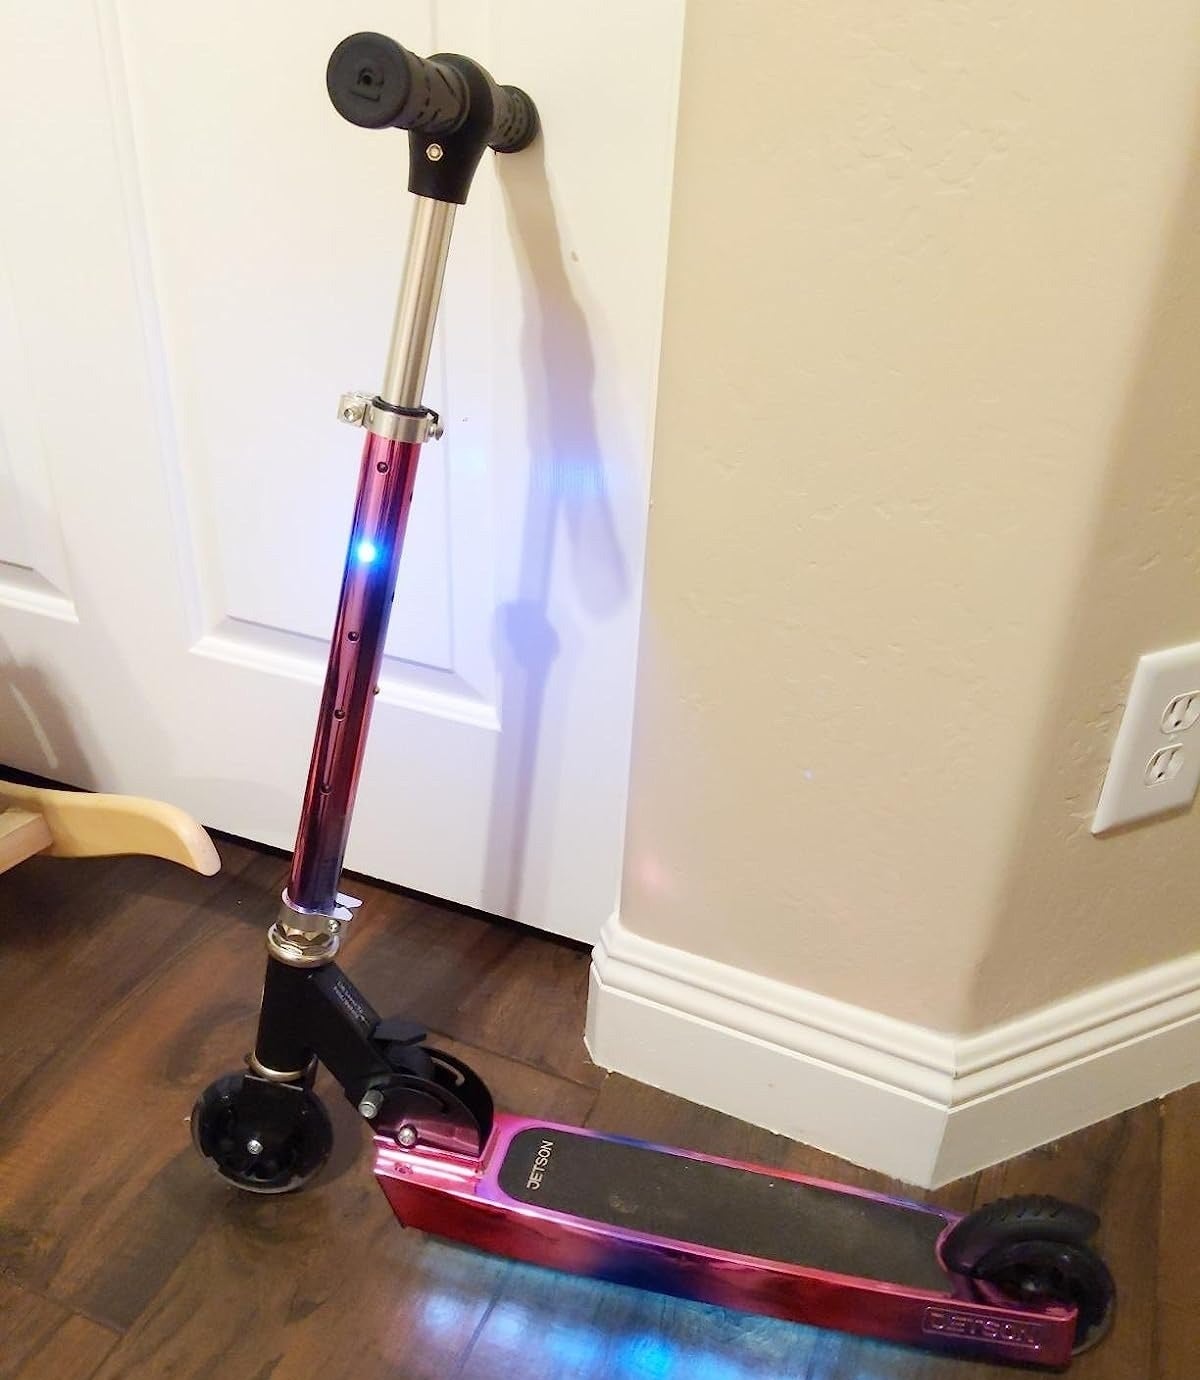 A light up scooter